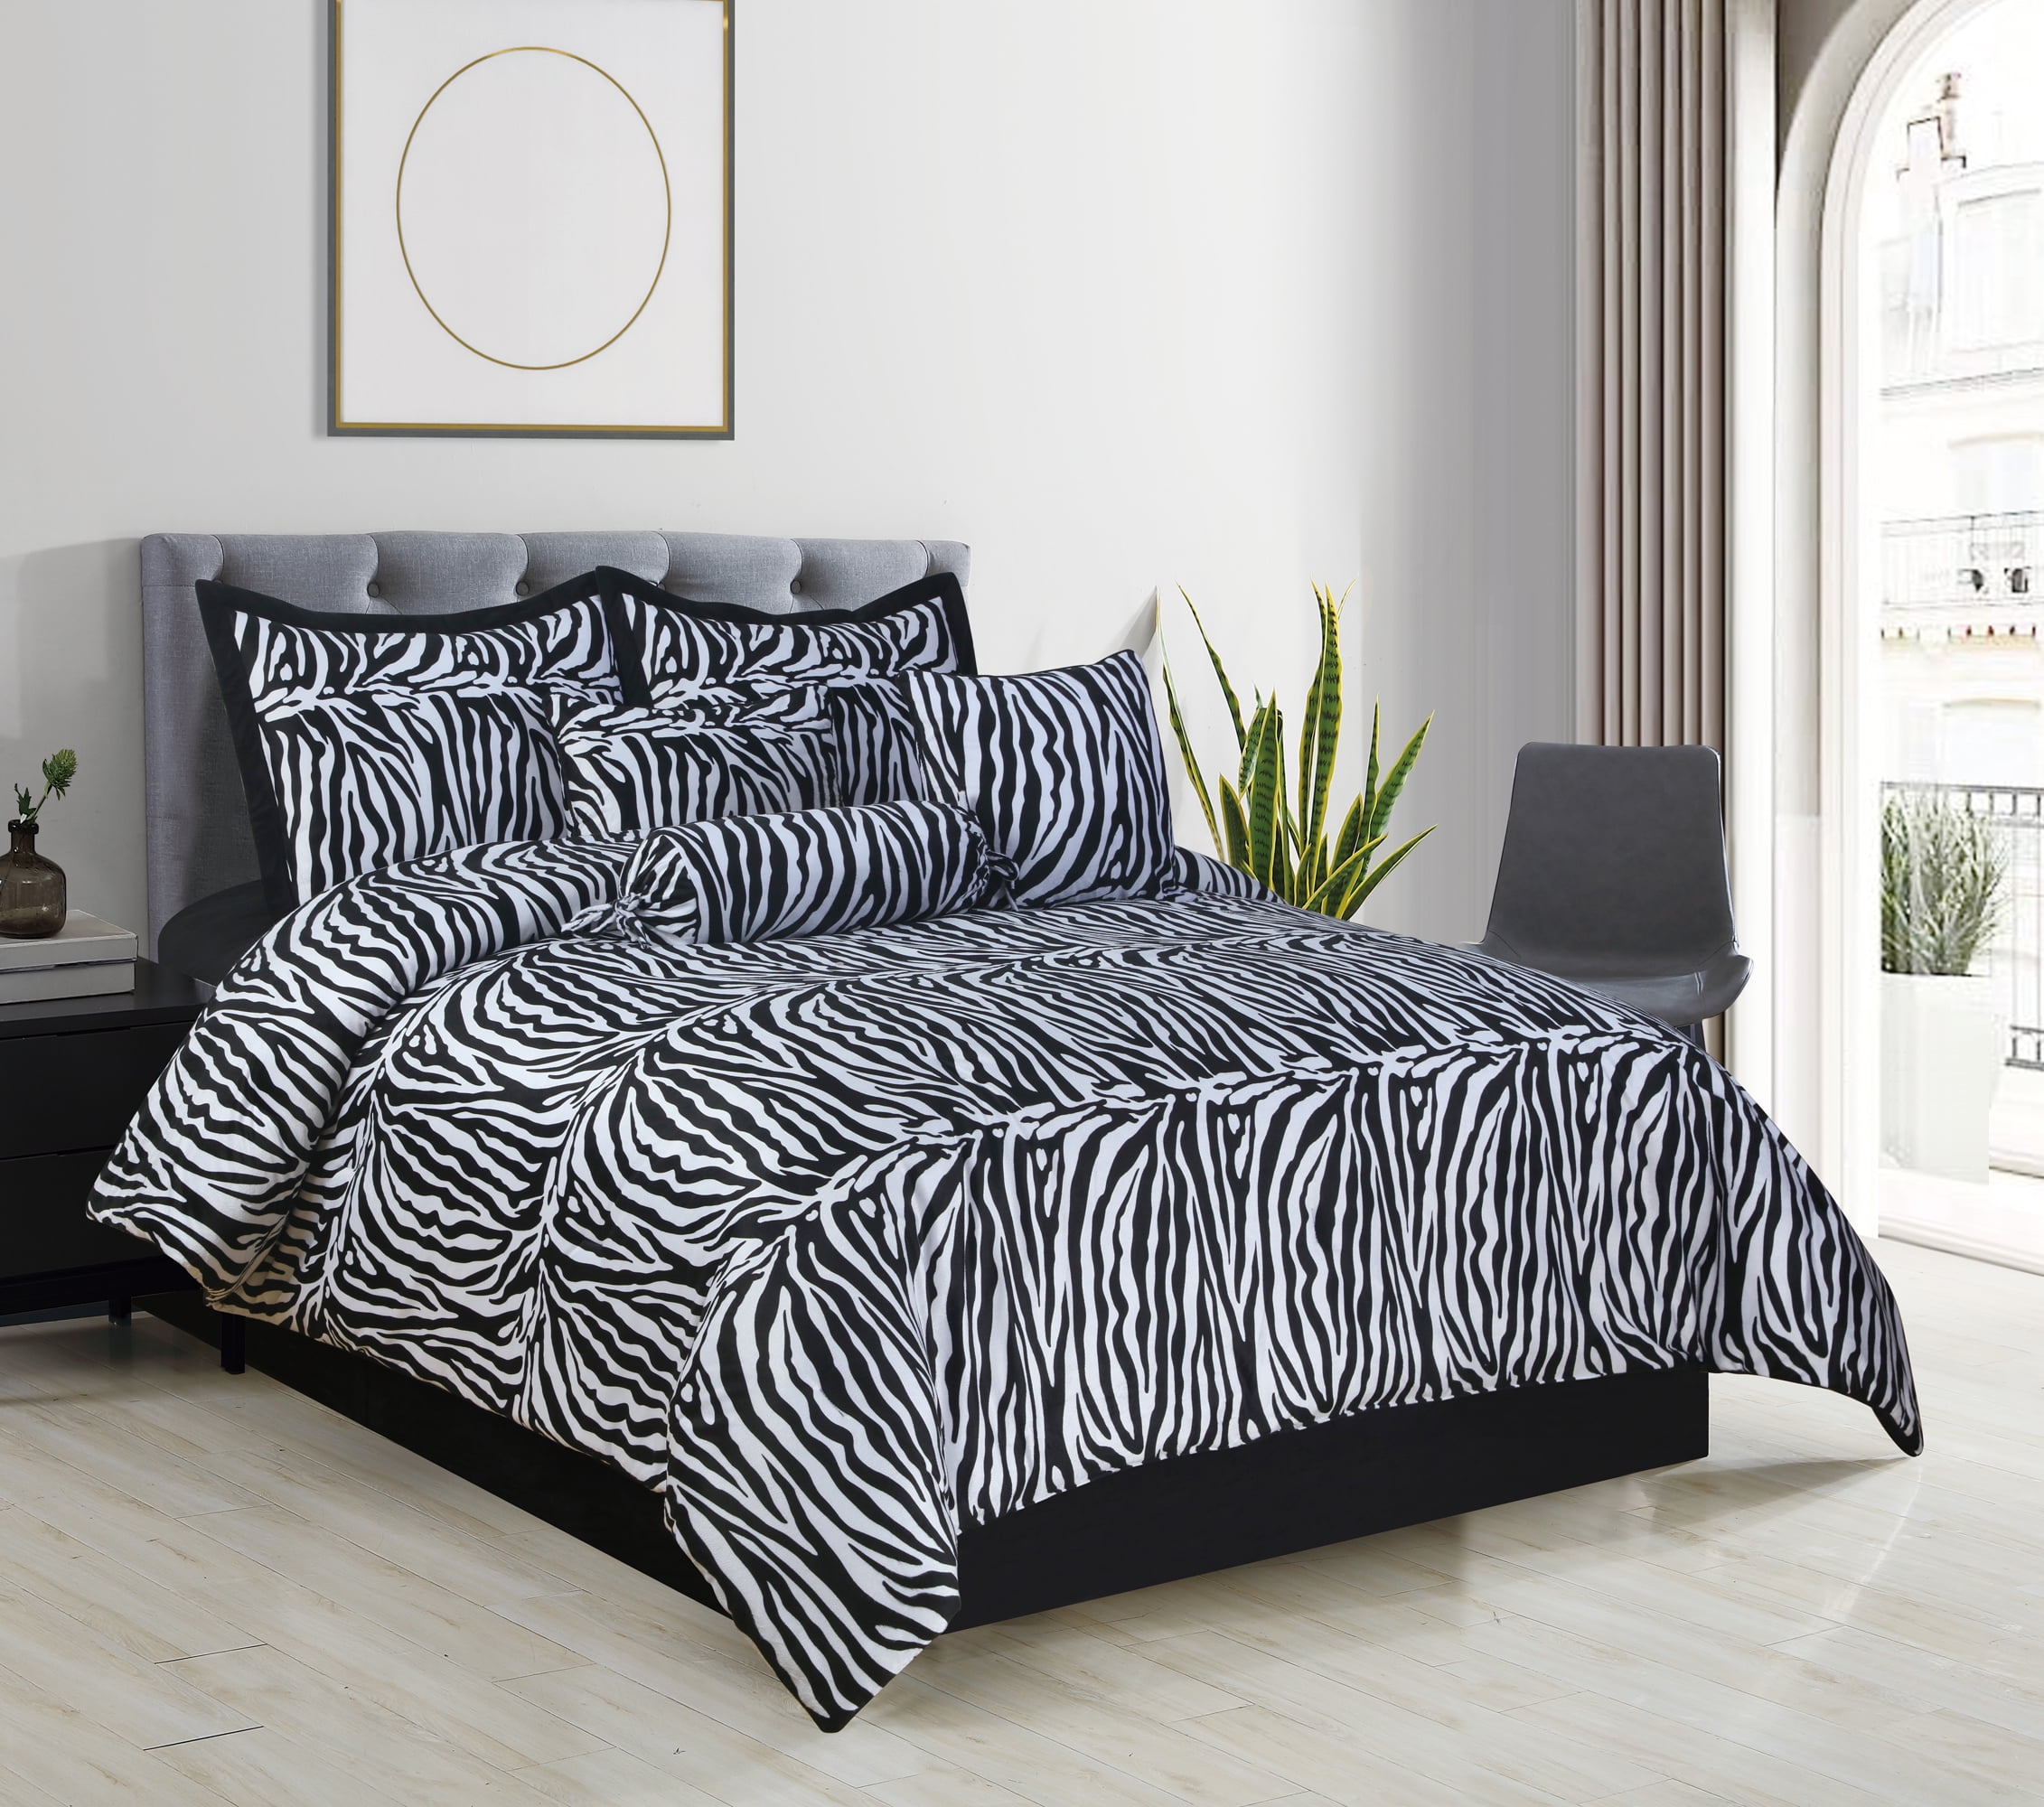 Zebra Leopard Reversible Queen Comforter Faux Fur Bedspread With Pillow Cover 